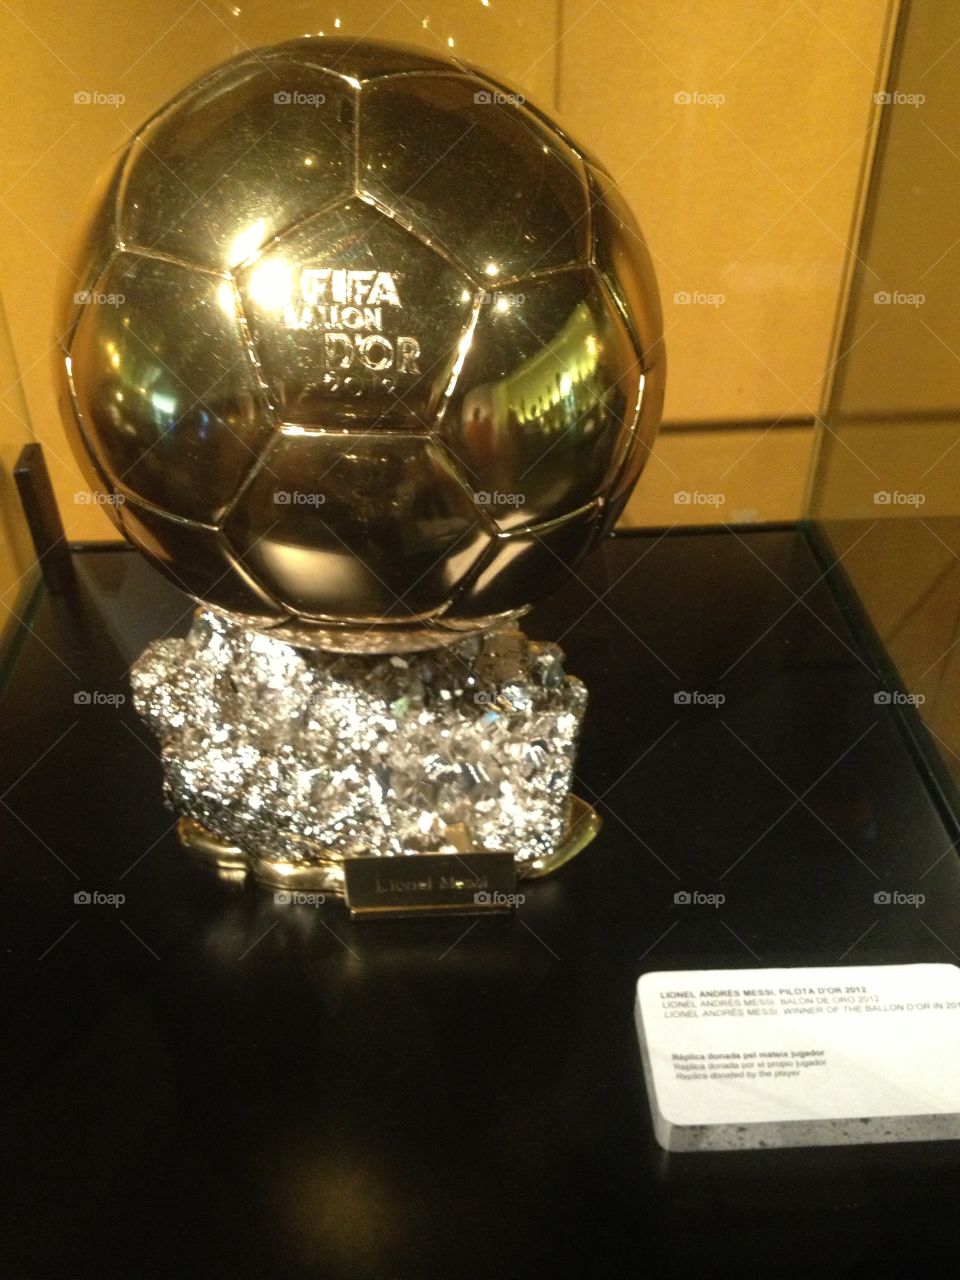 Lionel Messi ballor d or 2012 trophy 